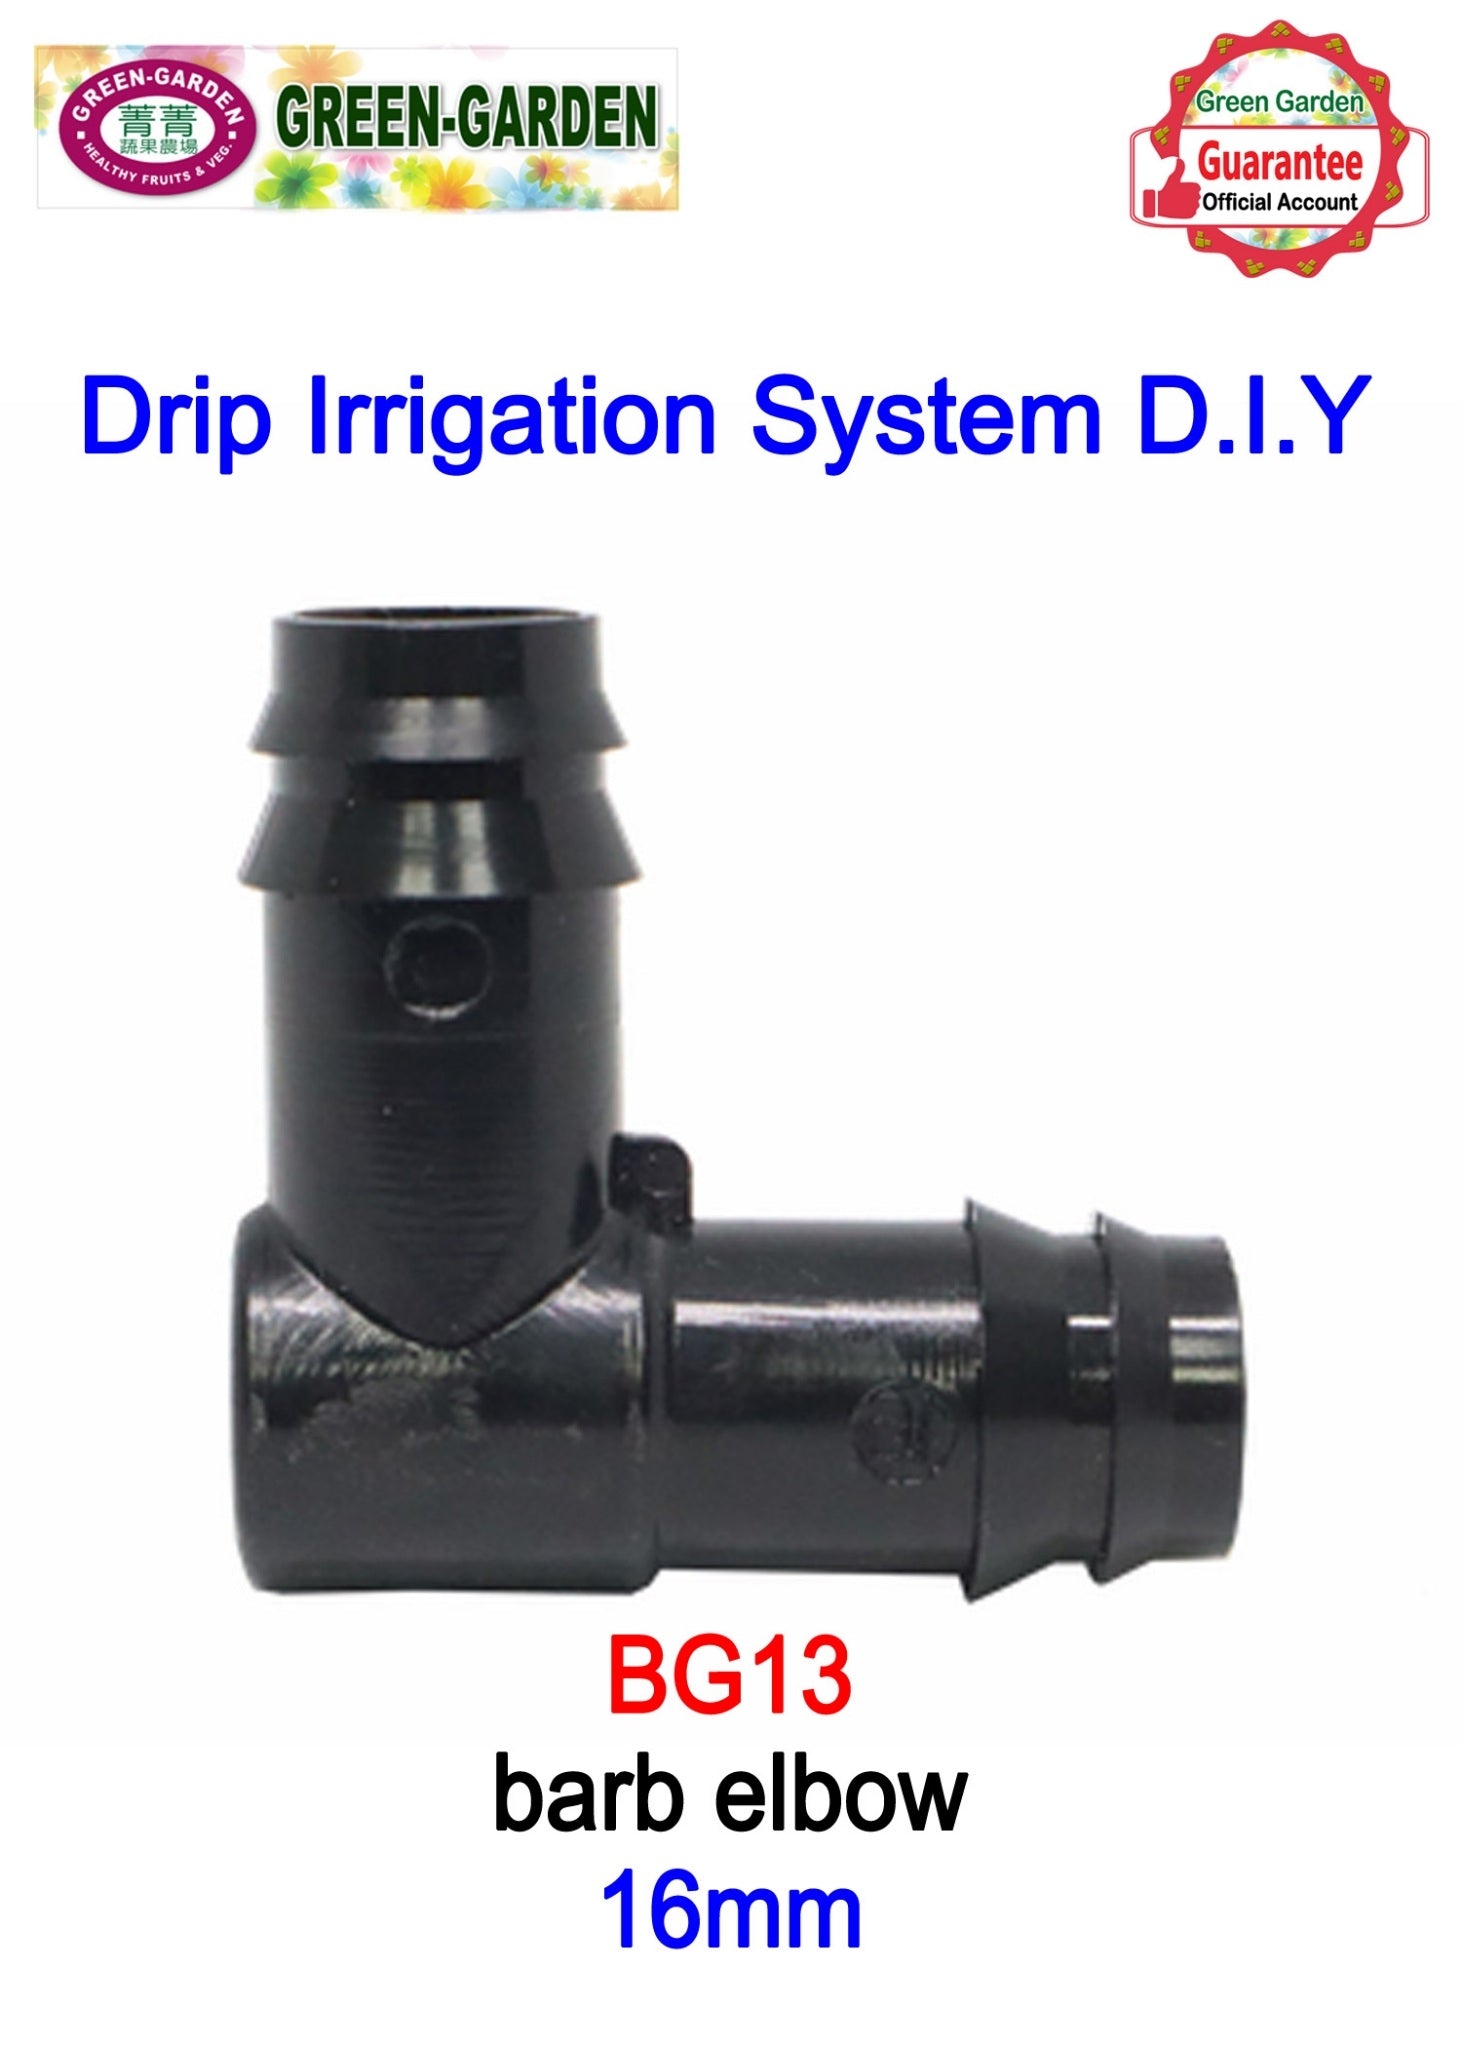 Drip Irrigation System - 16mm Barb Elbow (2pcs) BG13